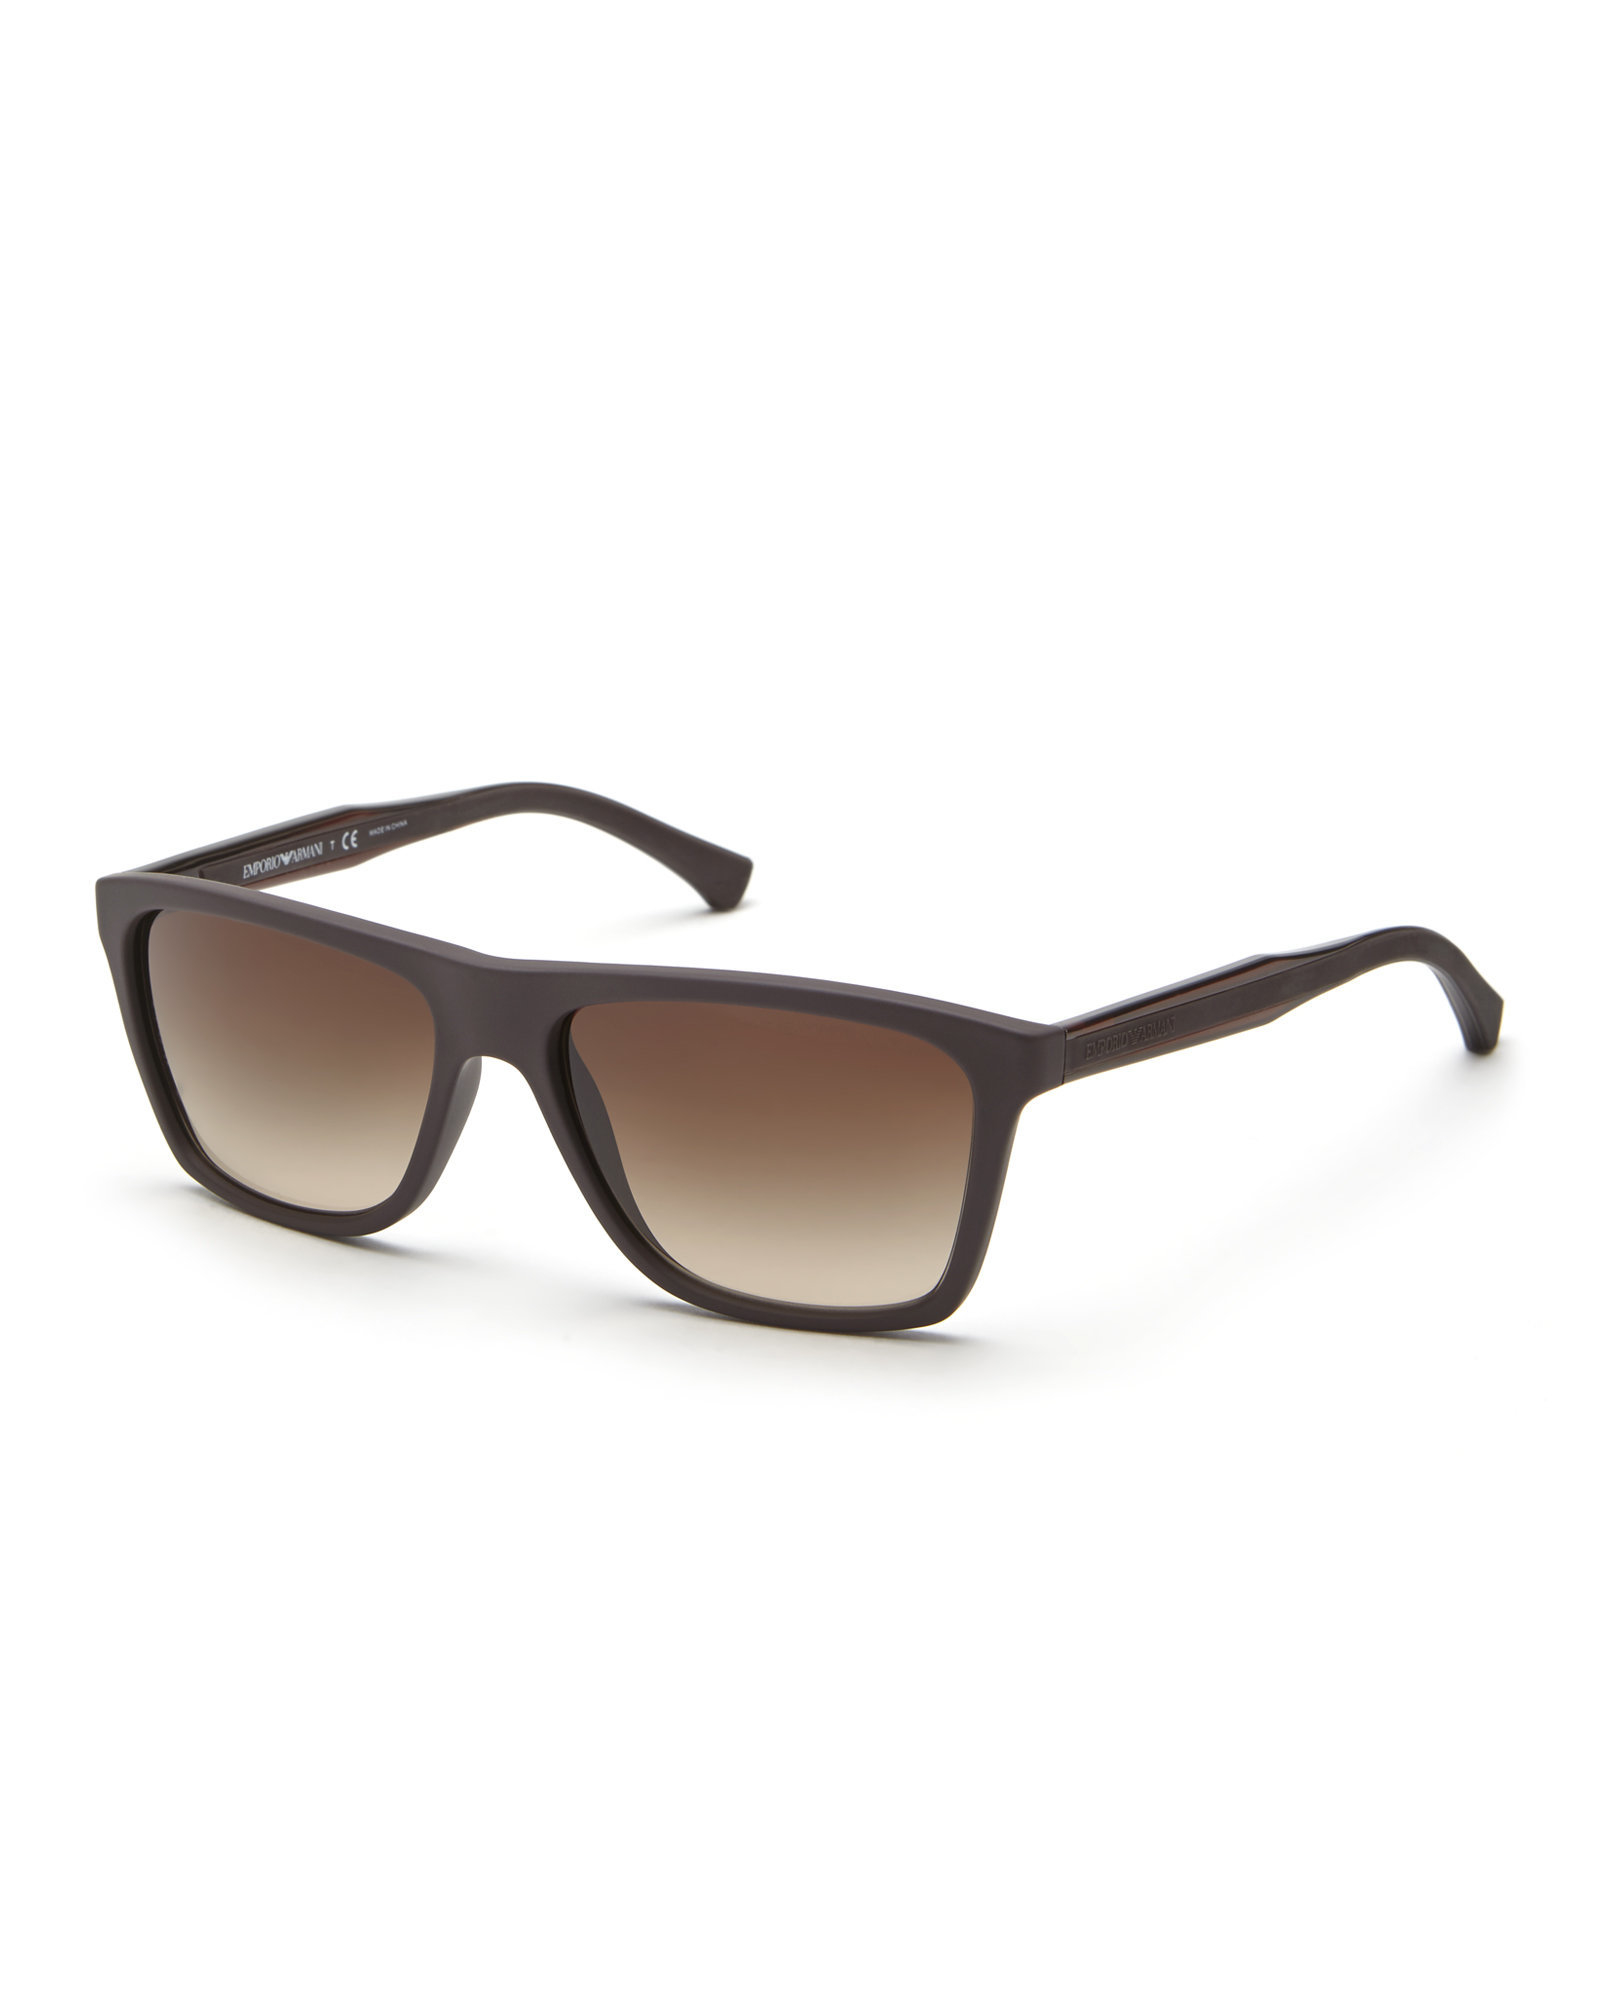 armani wayfarer sunglasses - 51% OFF 